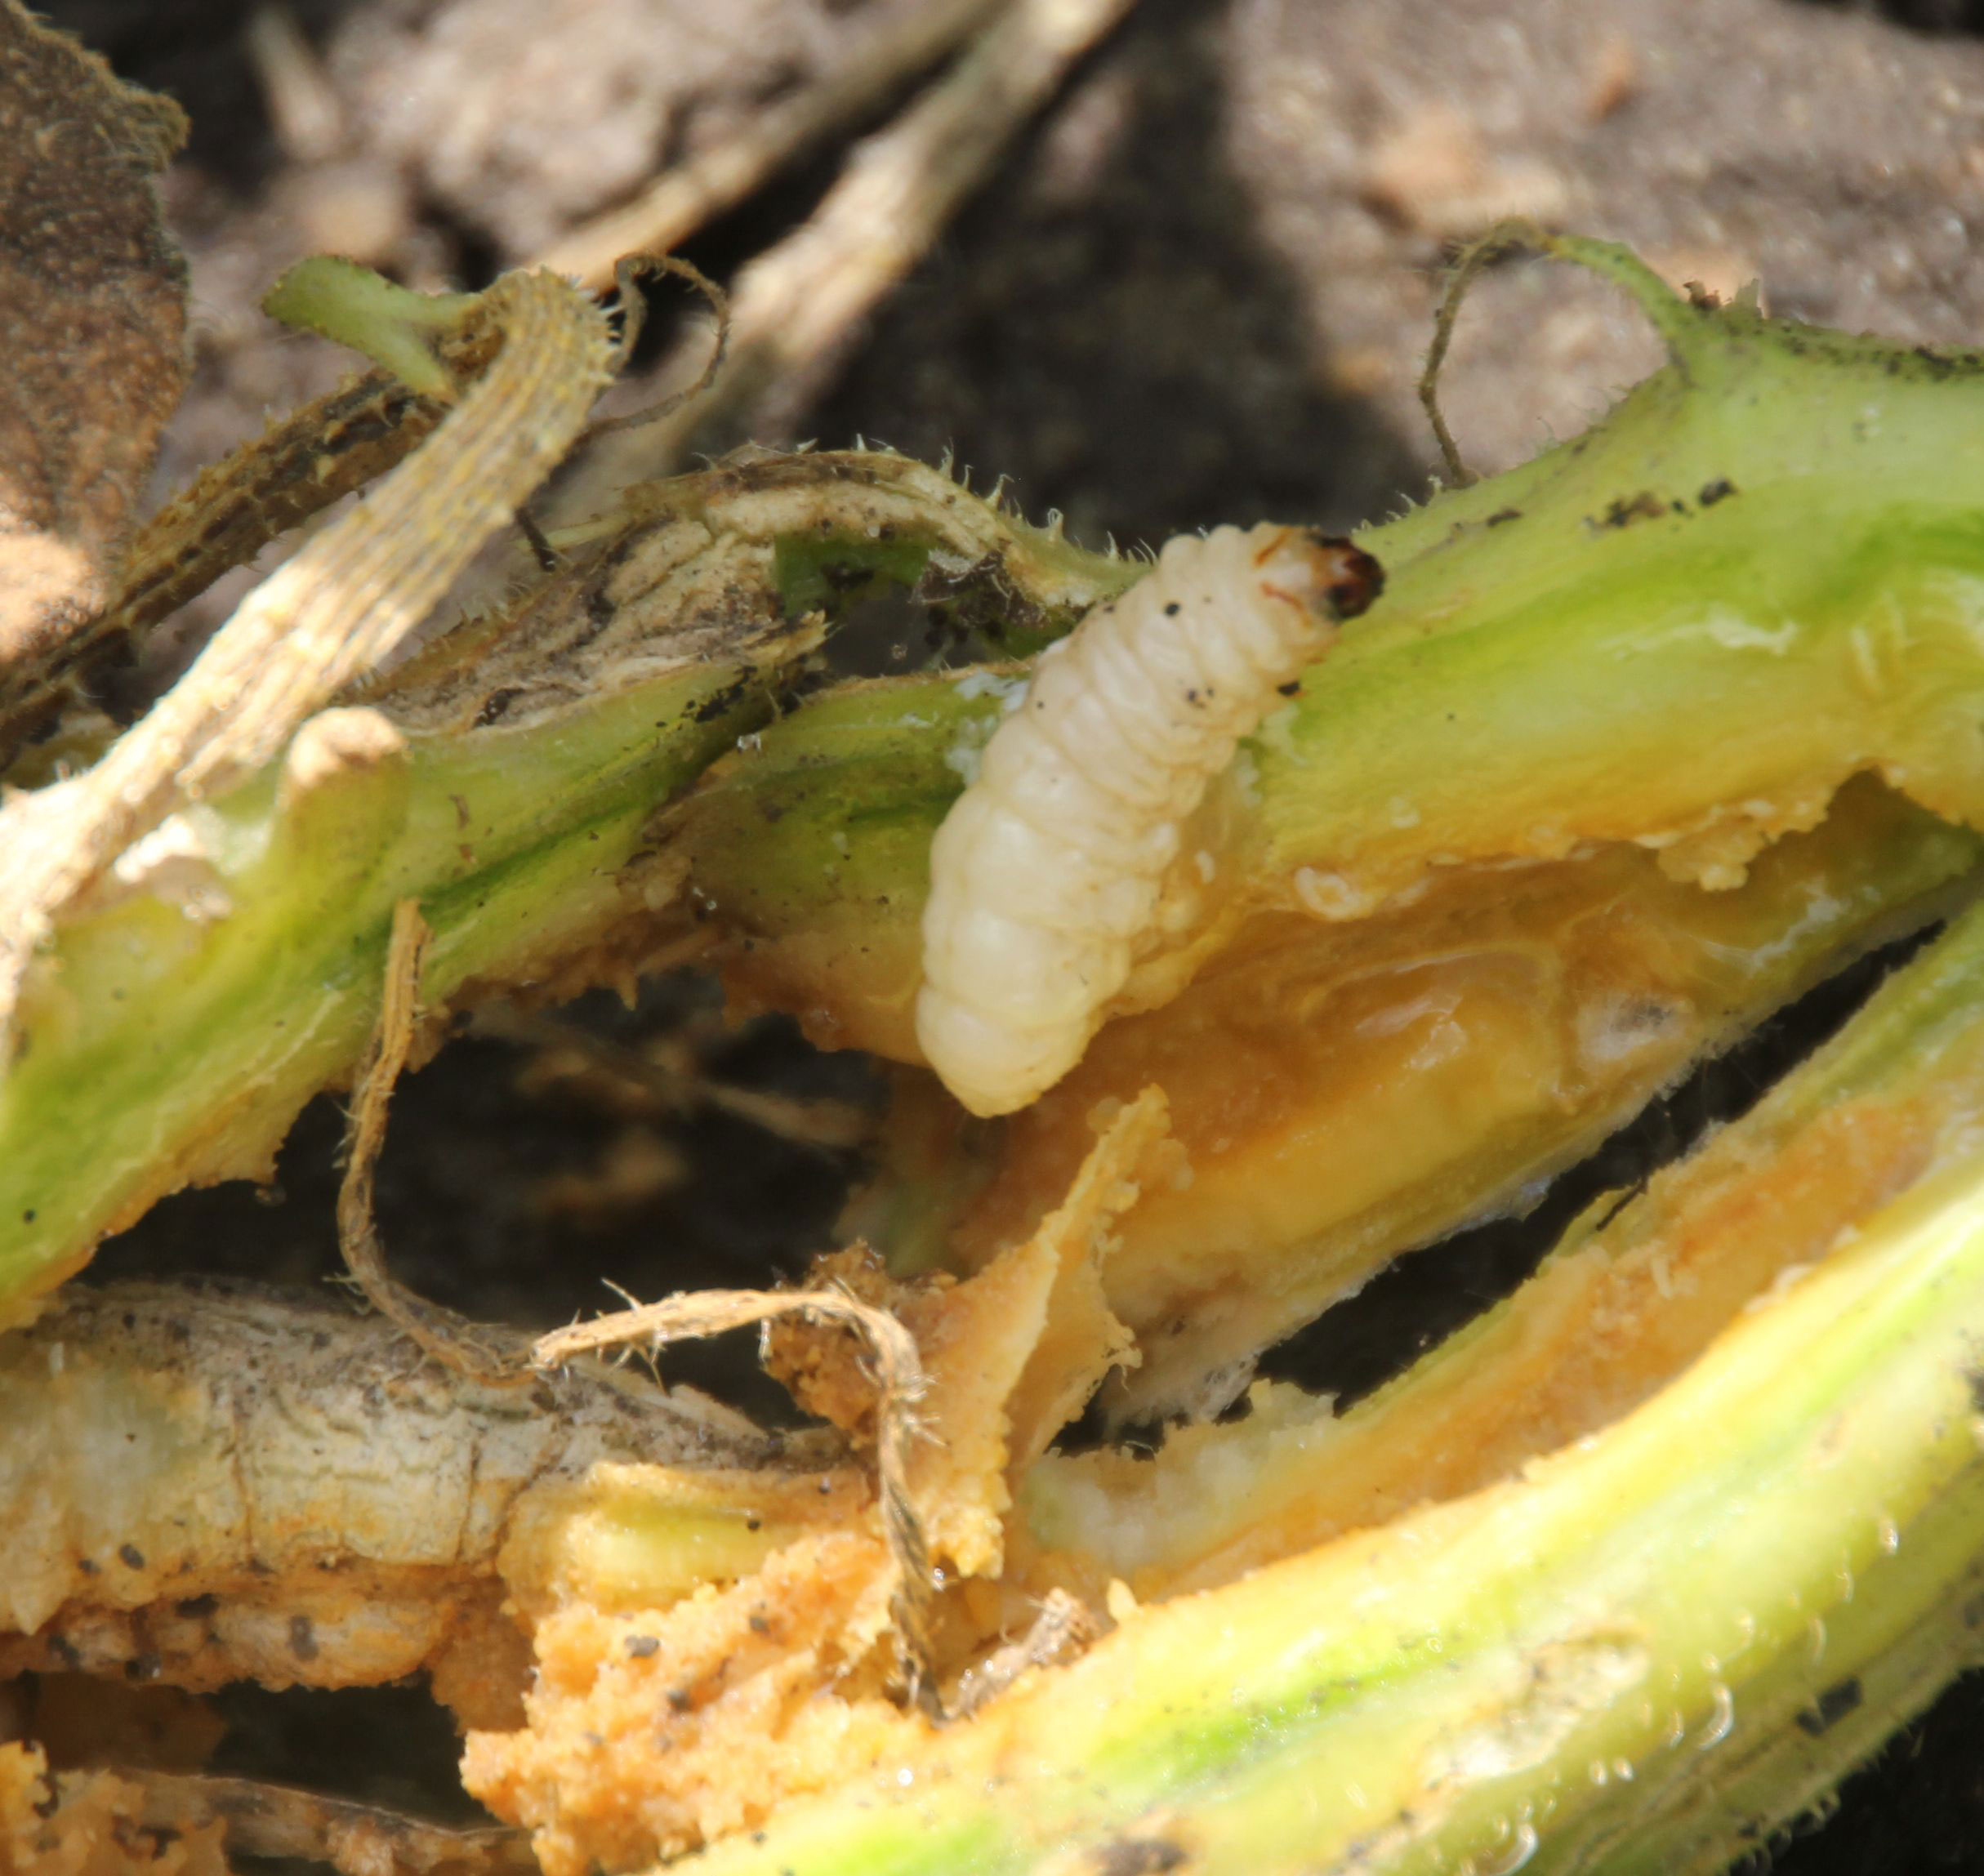 A cream-colored, squash vine borer larva crawling on a squash plant.